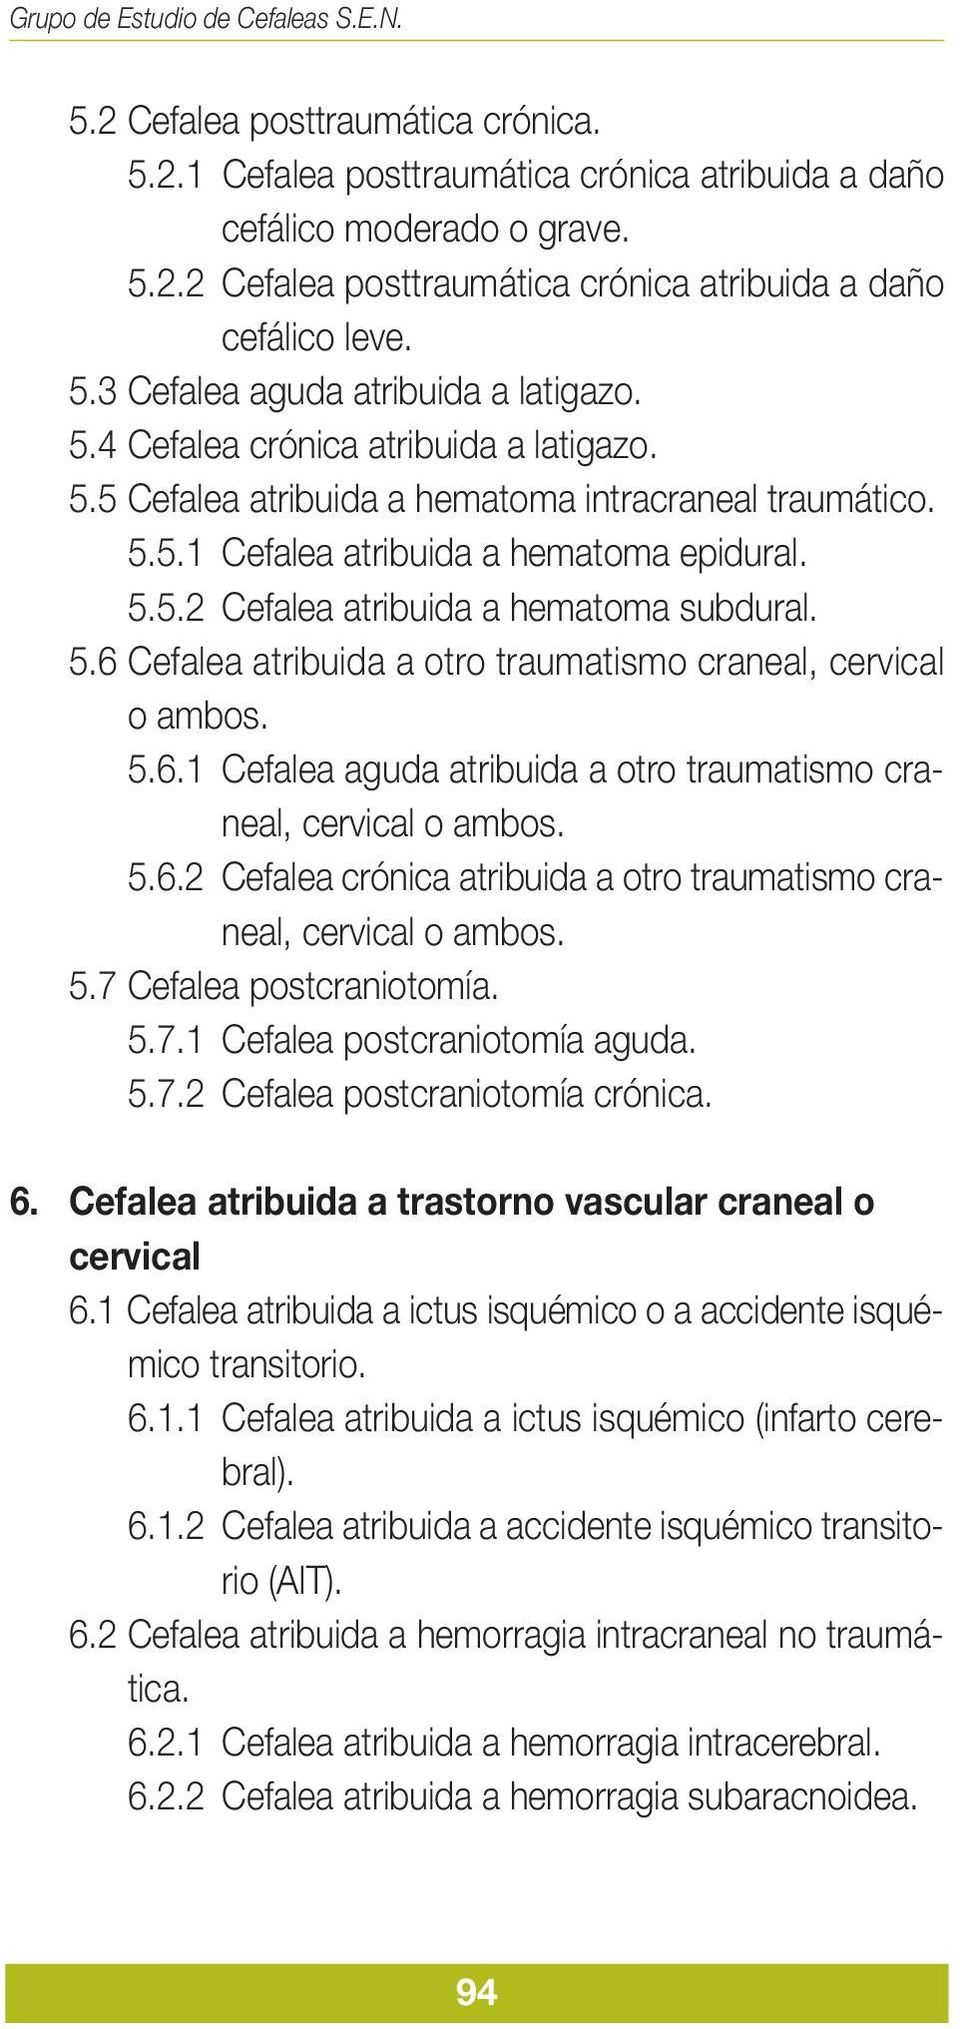 5.6 Cefalea atribuida a otro traumatismo craneal, cervical o ambos. 5.6.1 Cefalea aguda atribuida a otro traumatismo craneal, cervical o ambos. 5.6.2 Cefalea crónica atribuida a otro traumatismo craneal, cervical o ambos.